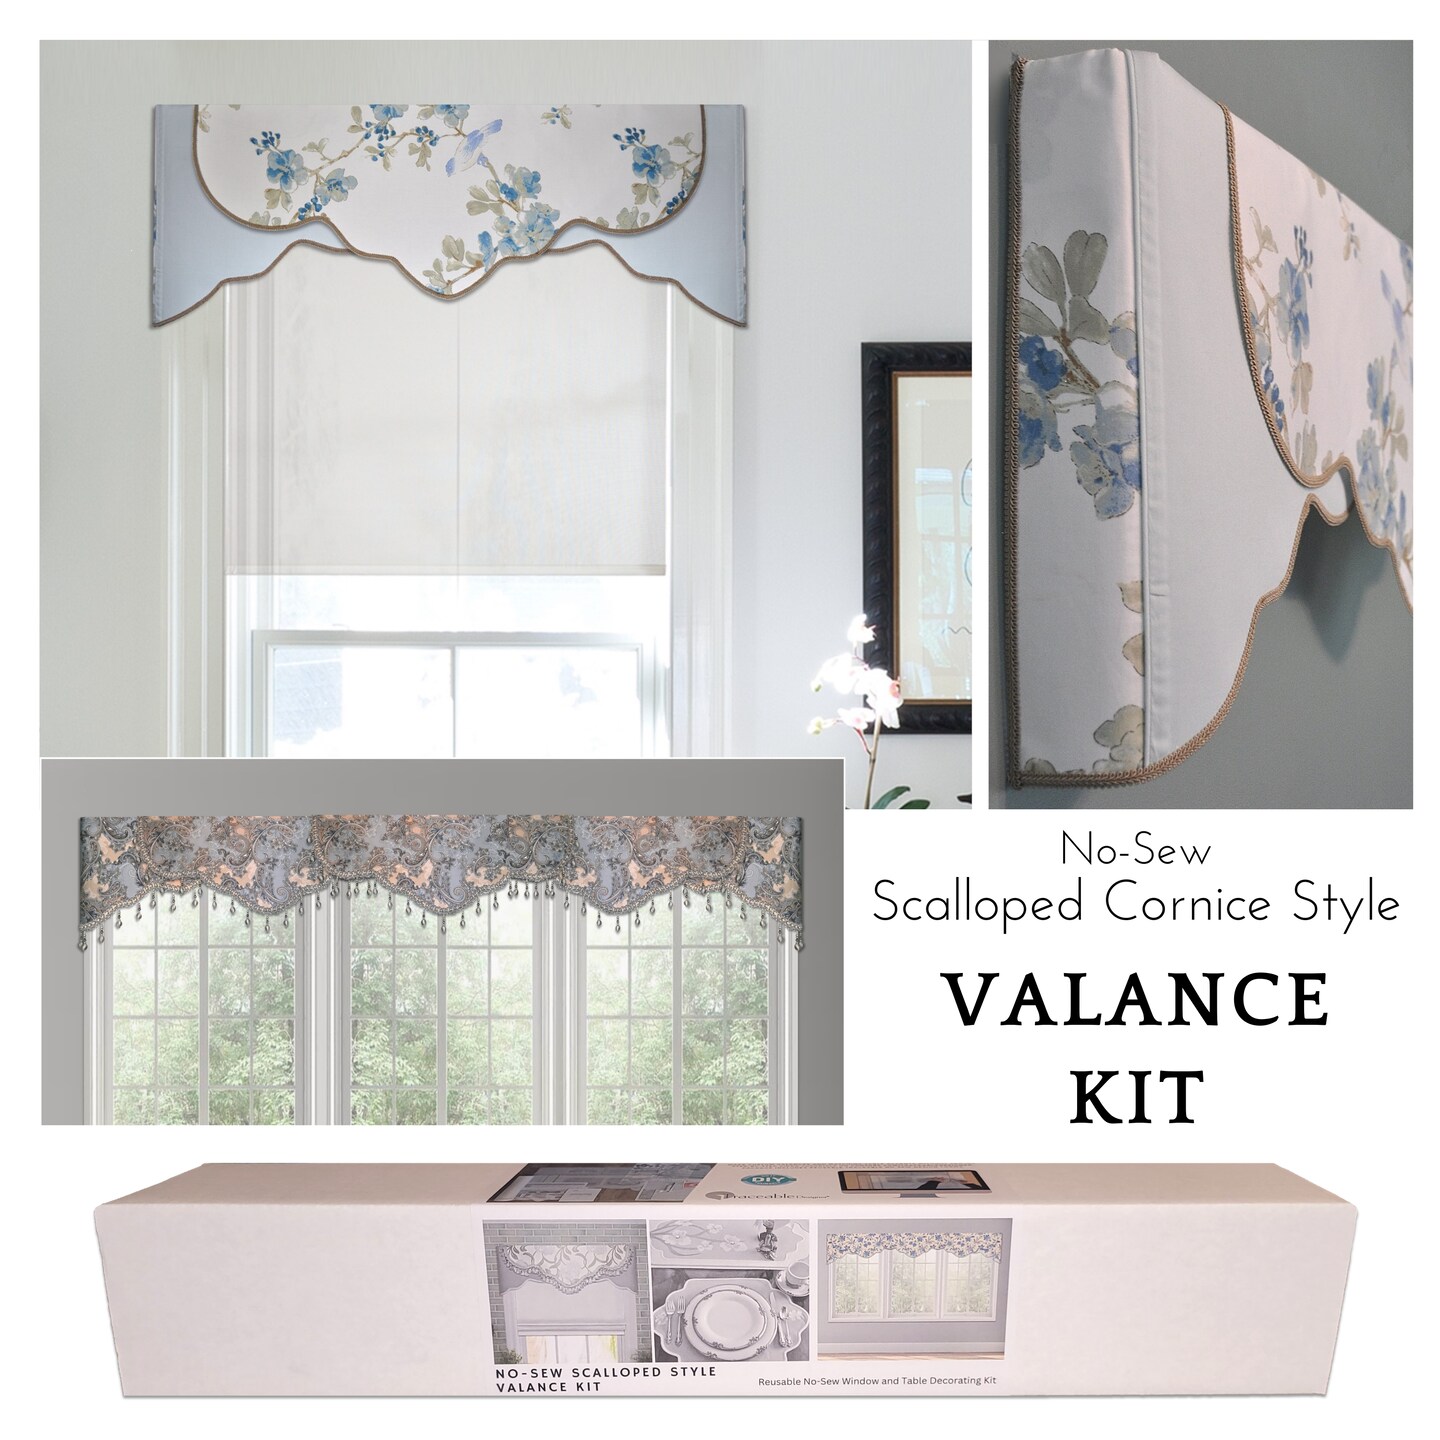 Scalloped-Style Cornice Valance Kit for DIY No-Sew Home Decor